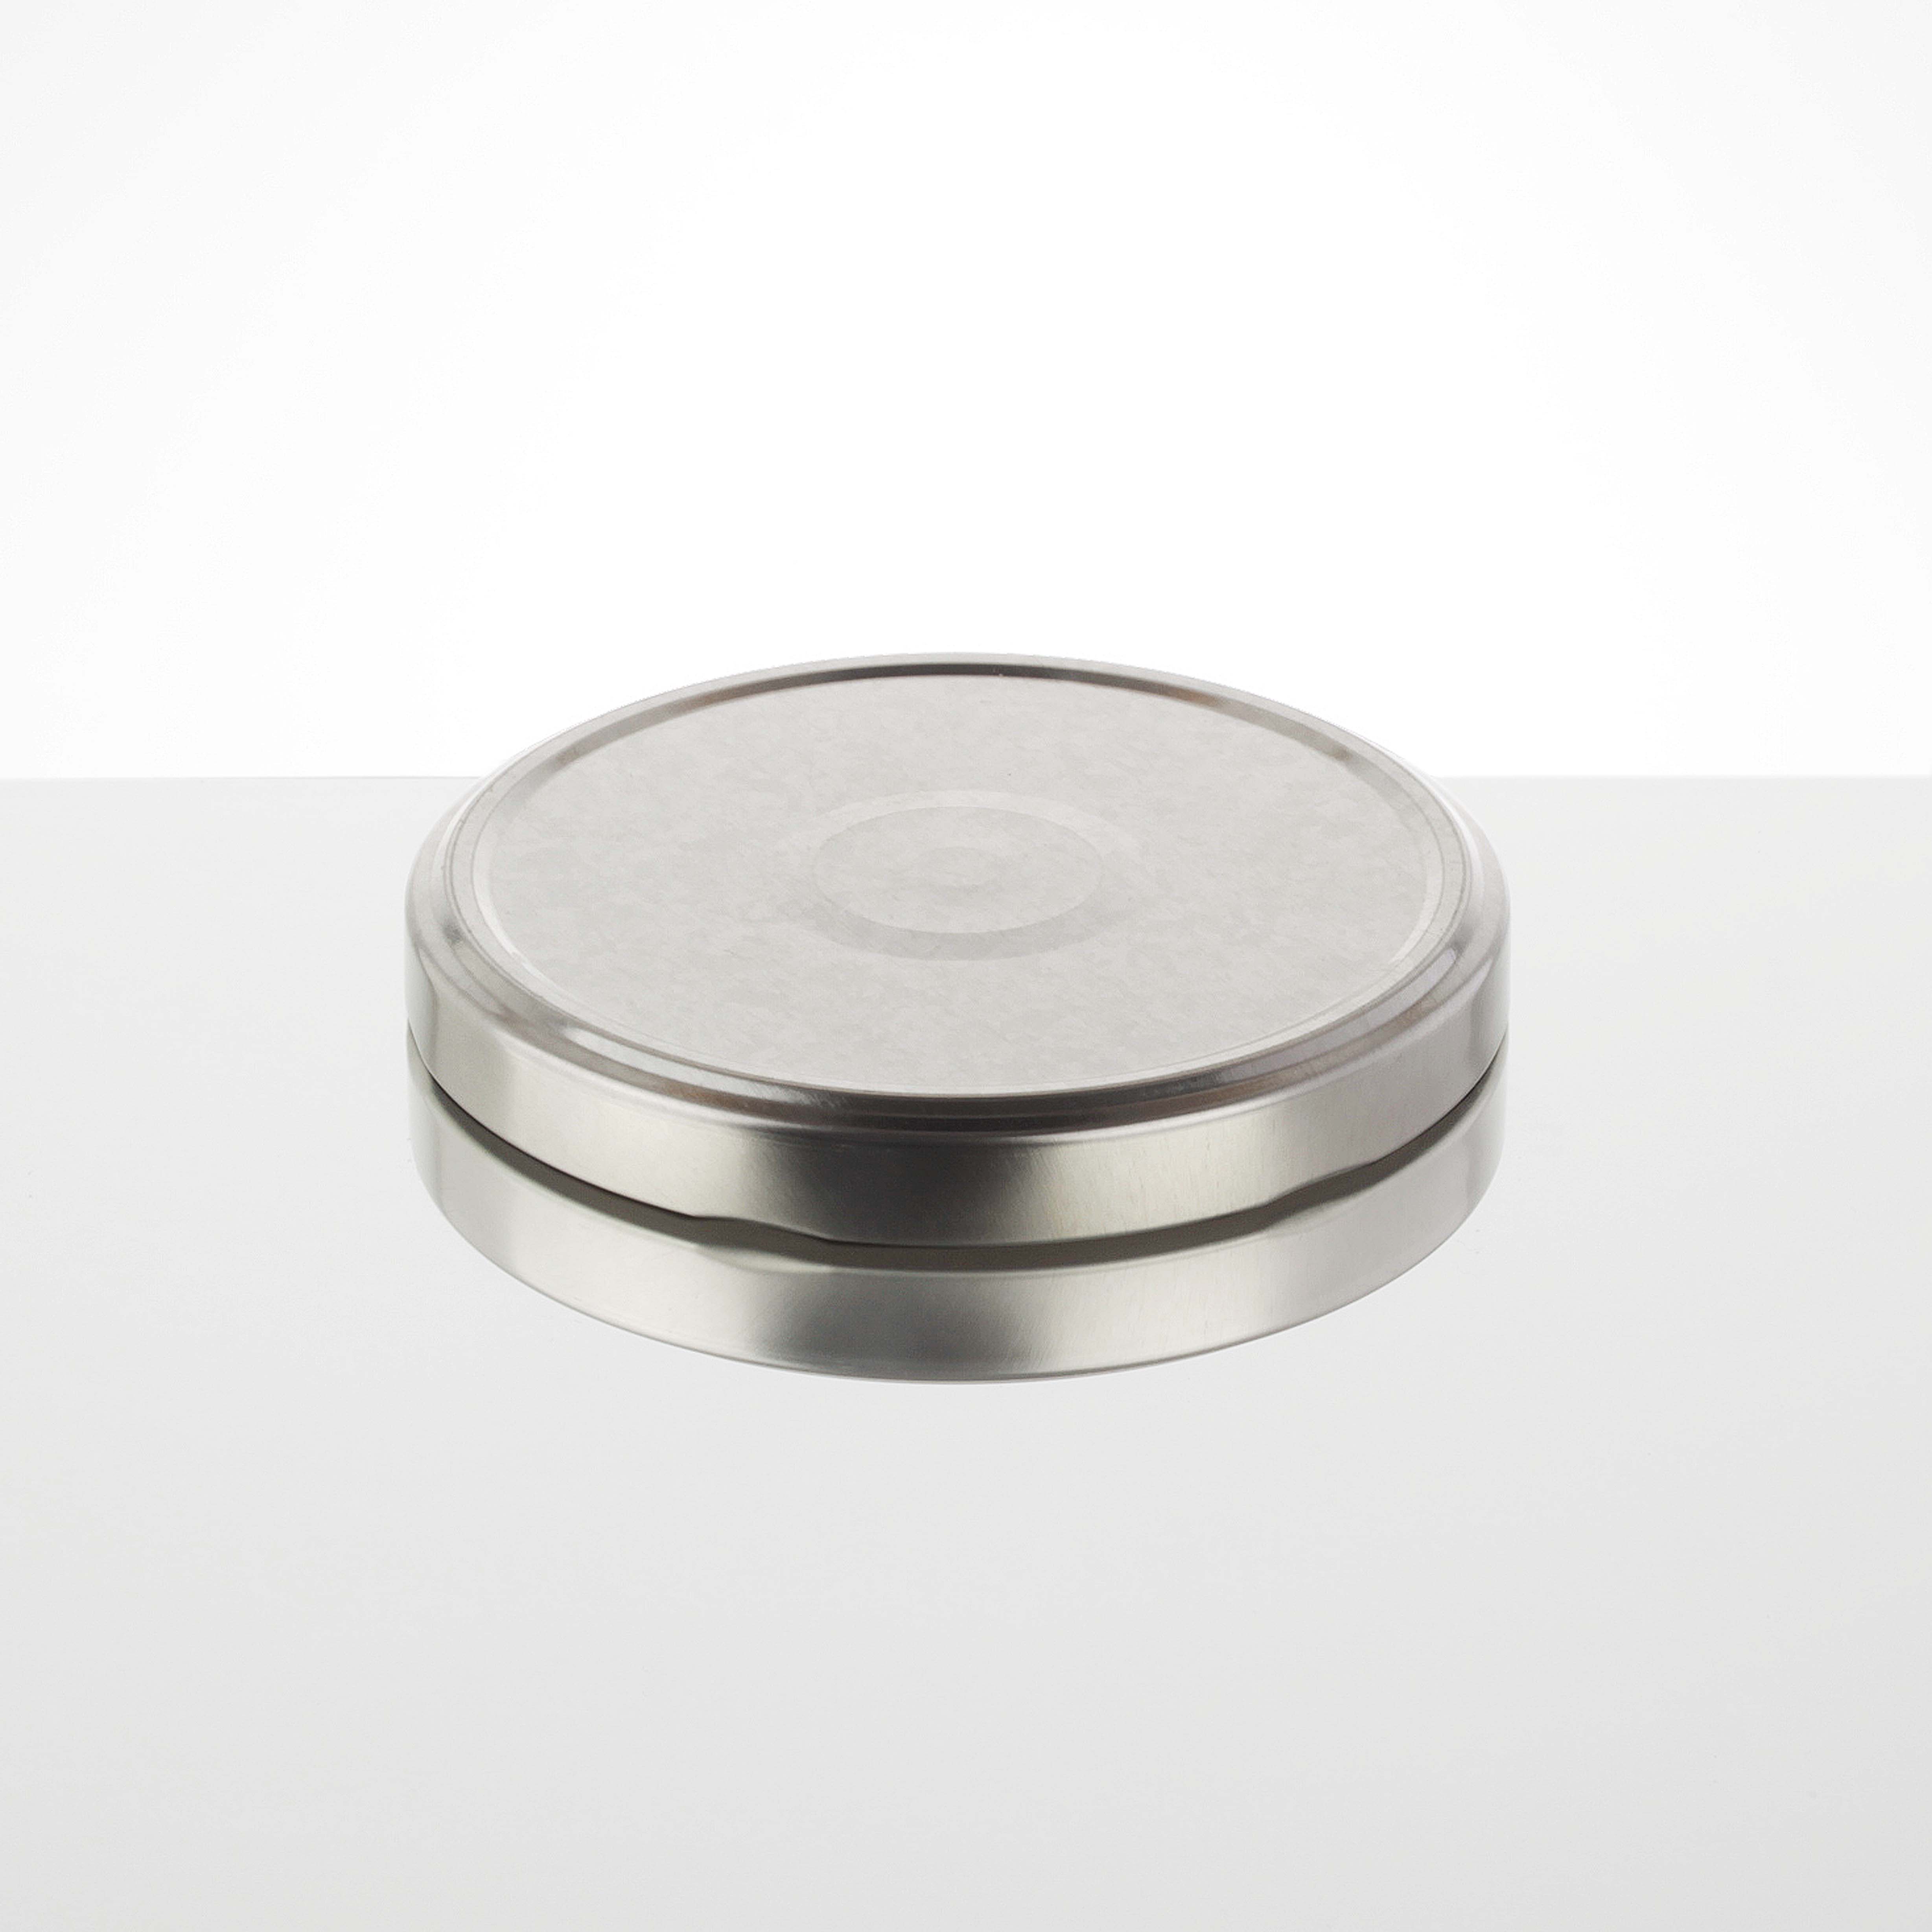 Twist-Off-Verschluss 100 mm silber Button - 100 mm Schraubverschluss - Flaschenbauer